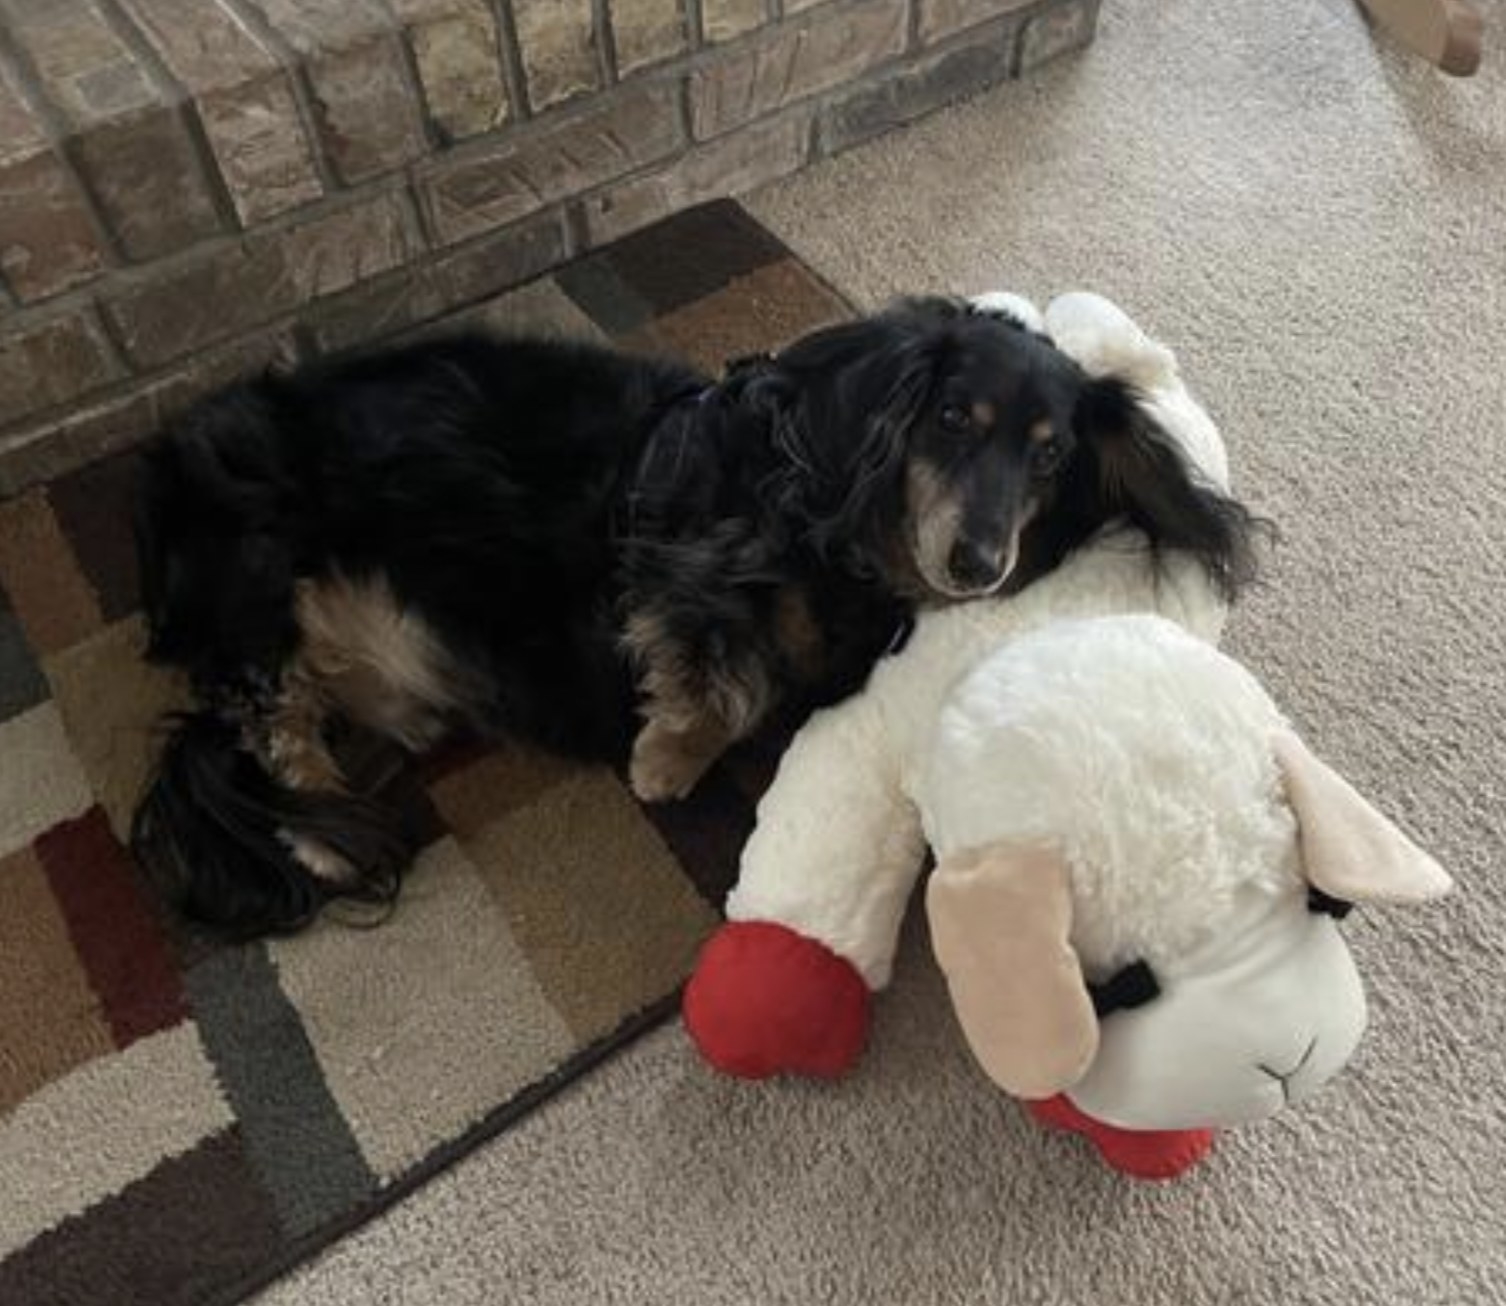 a dog laying on a large lambchop toy